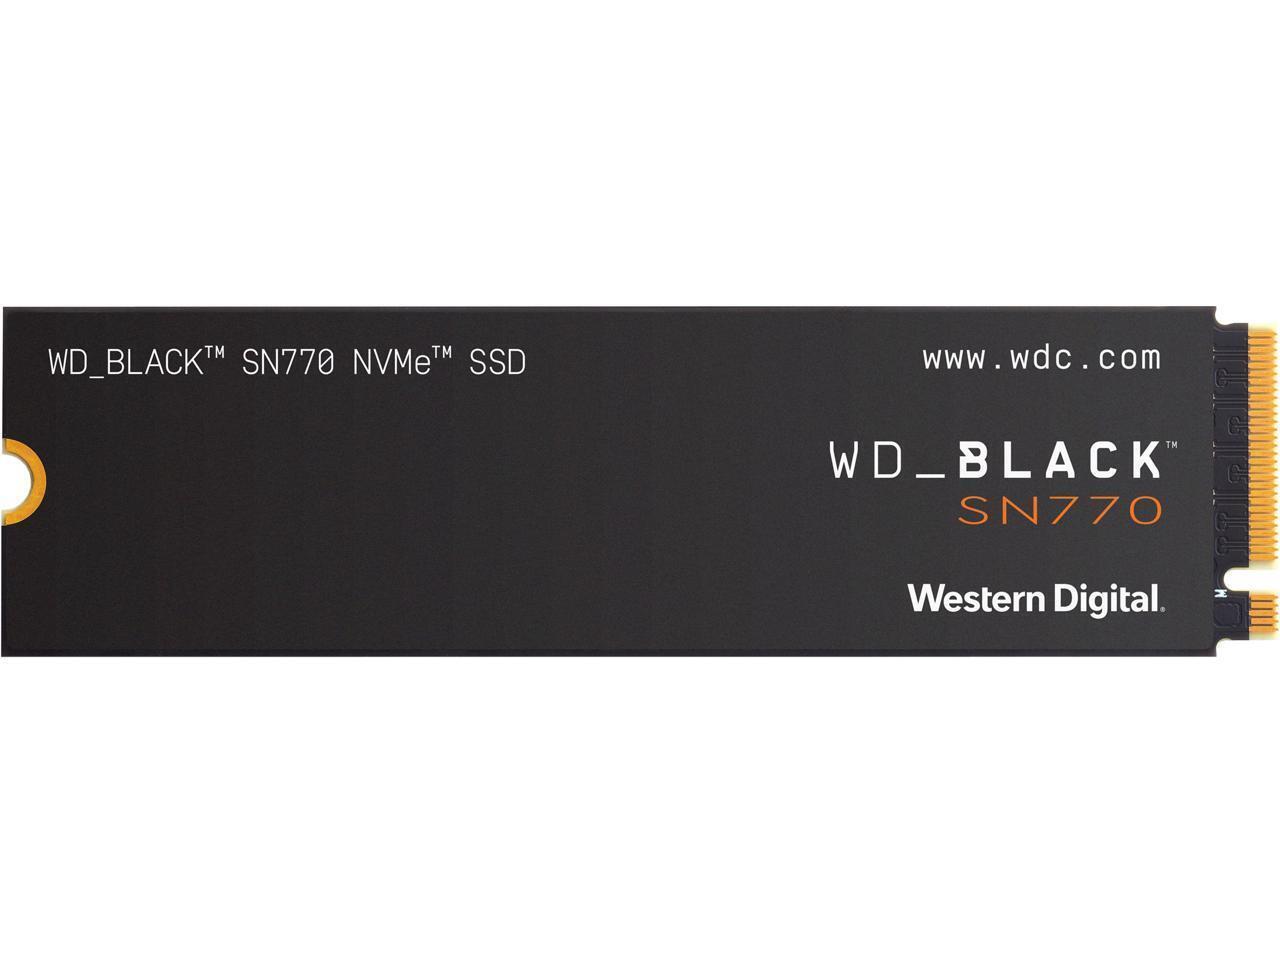 Western Digital WD_BLACK SN770 M.2 2280 250GB PCIe Gen4 16GT/s, up to 4 Lanes